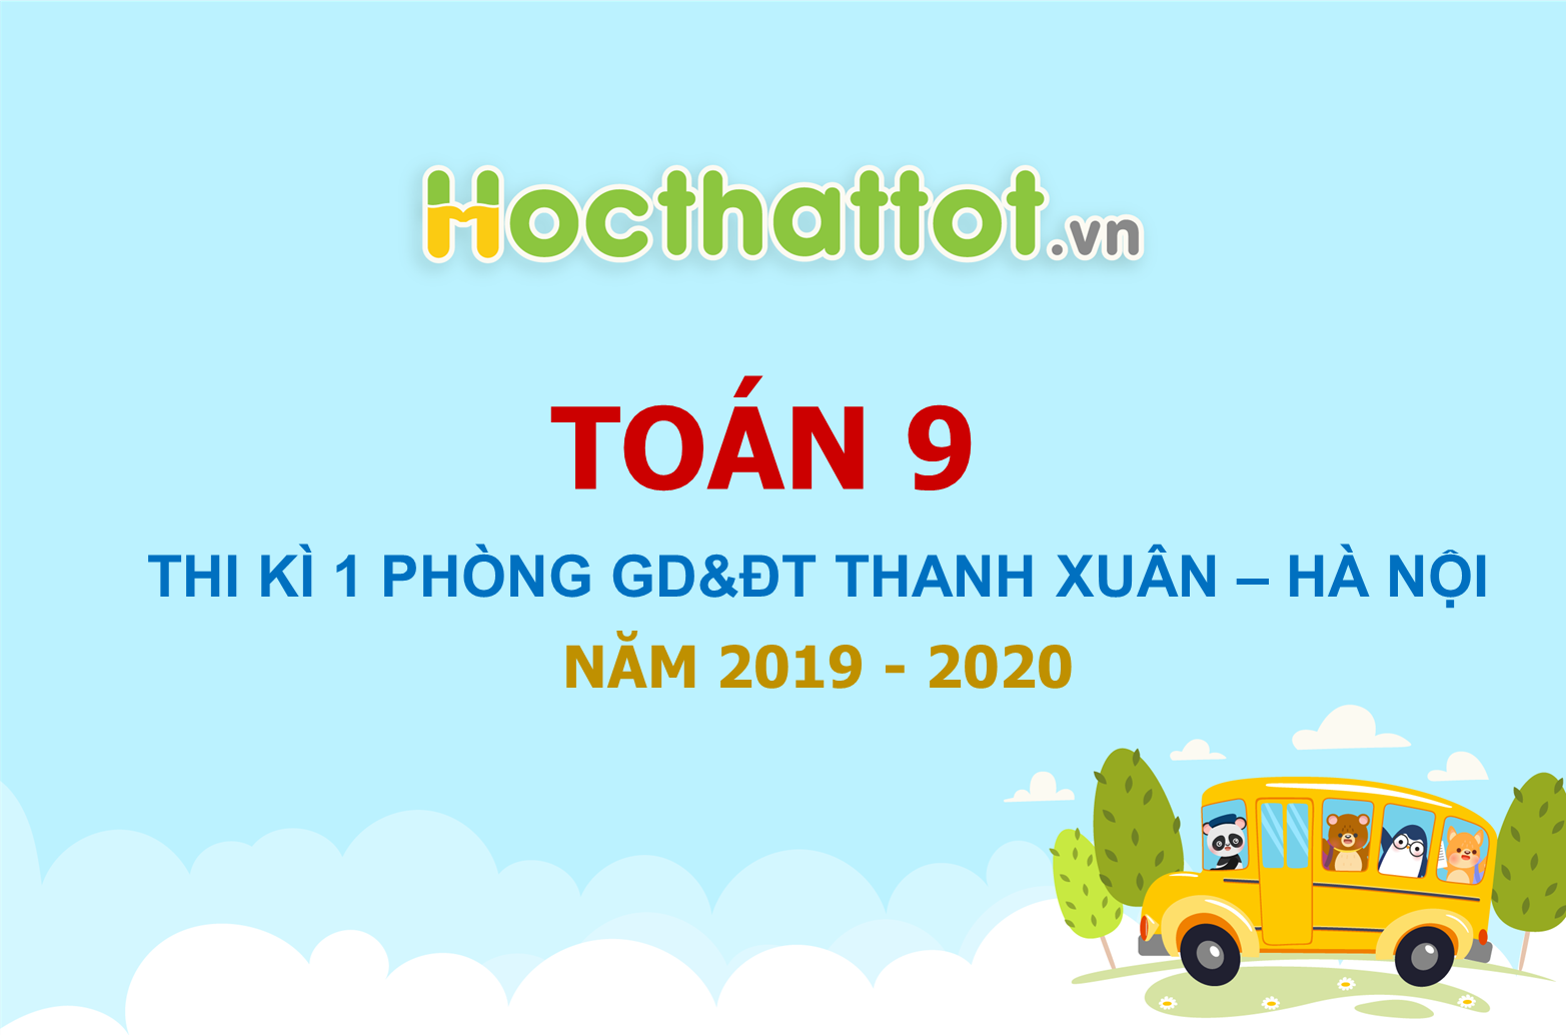 de-thi-ki-1-toan-9-nam-2019-2020-phong-gddt-thanh-xuan-ha-noi.pdf